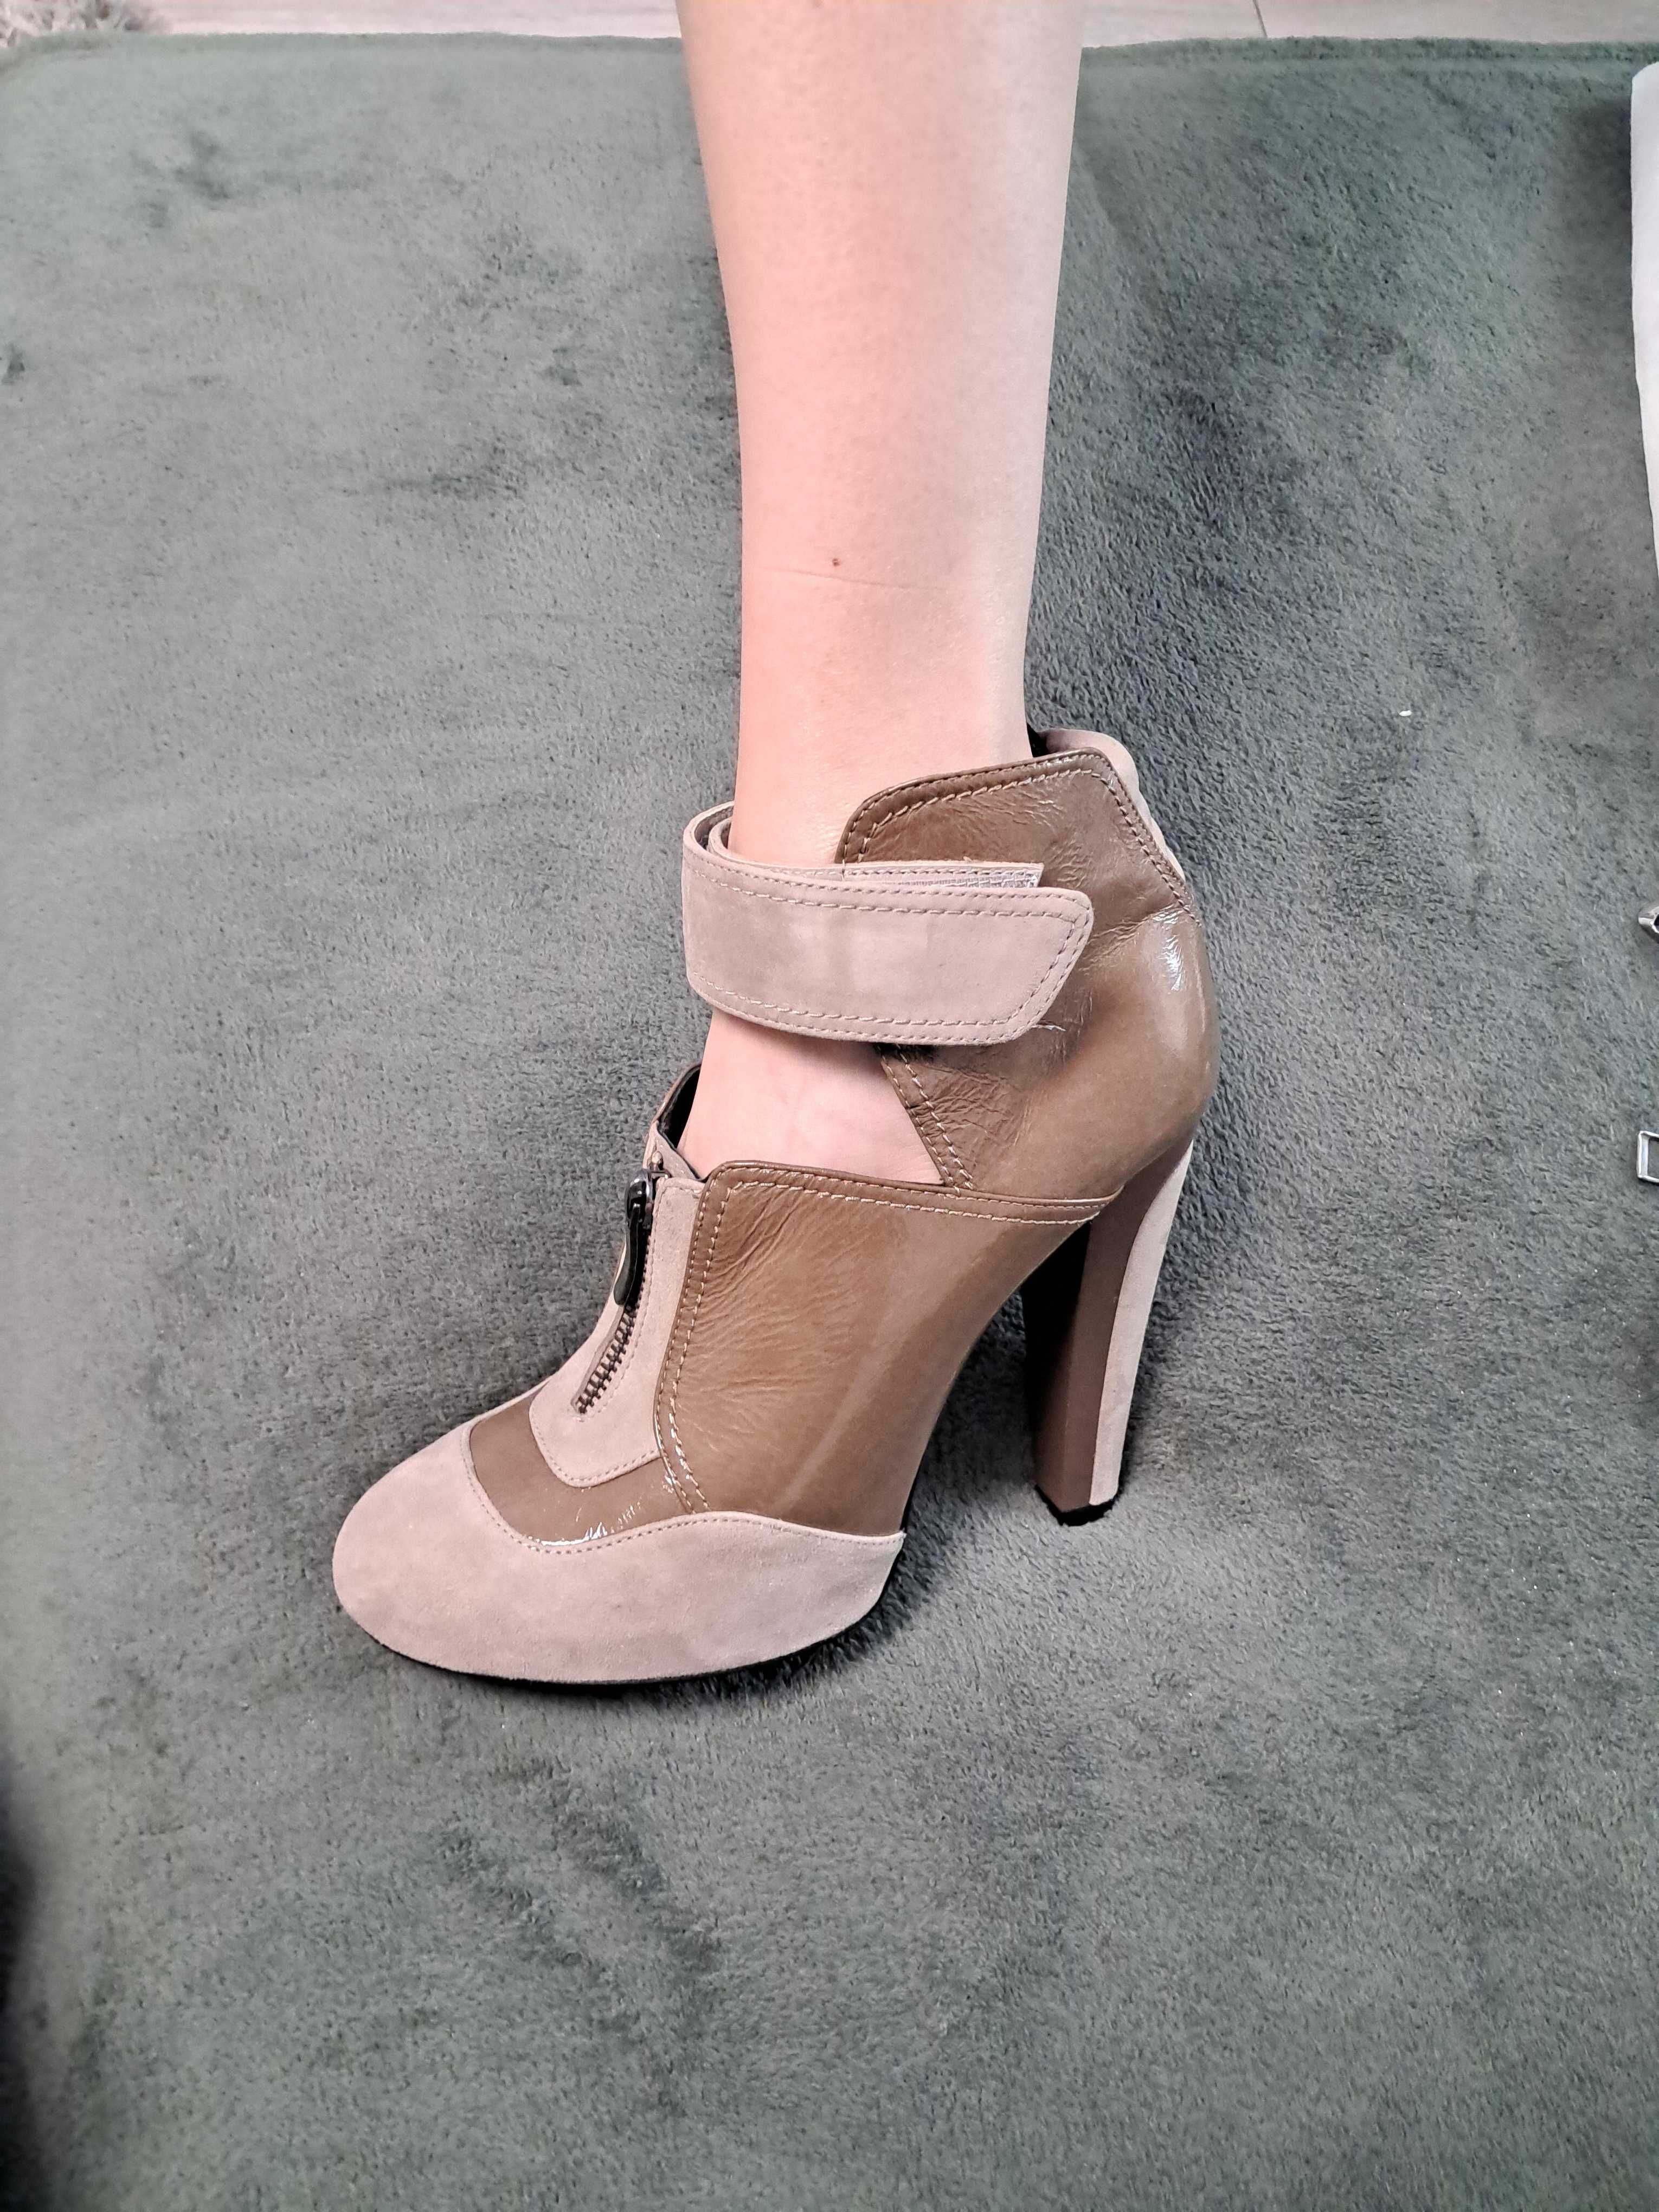 Pantofi Barbara Bui Vogue  Originali piele